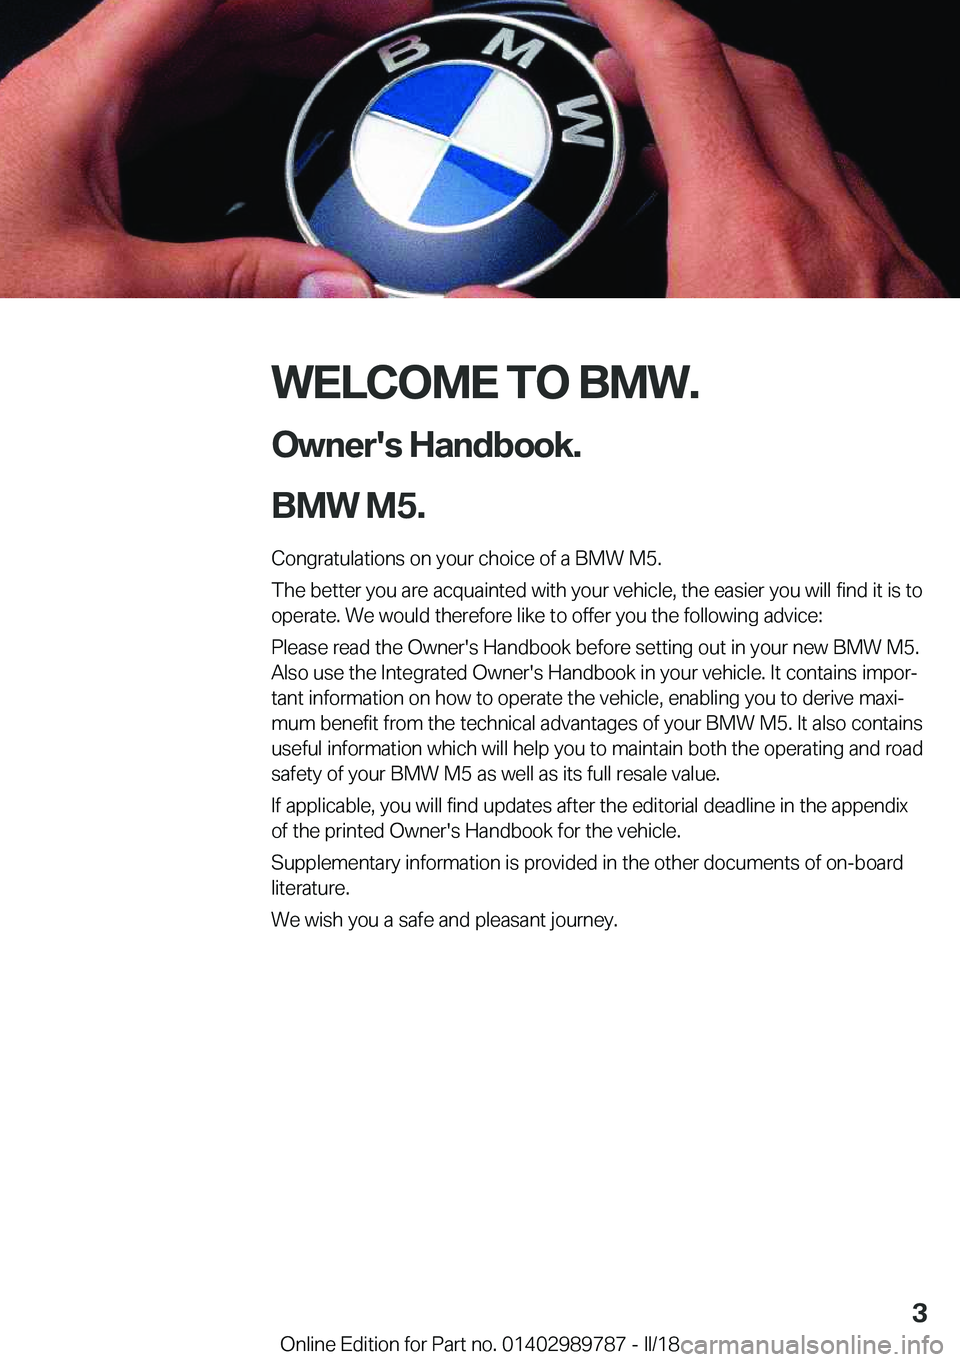 BMW M5 2018  Owners Manual �W�E�L�C�O�M�E��T�O��B�M�W�.�O�w�n�e�r�'�s��H�a�n�d�b�o�o�k�.
�B�M�W��M�5�.
�C�o�n�g�r�a�t�u�l�a�t�i�o�n�s��o�n��y�o�u�r��c�h�o�i�c�e��o�f��a��B�M�W��M�5�.
�T�h�e��b�e�t�t�e�r��y�o�u�